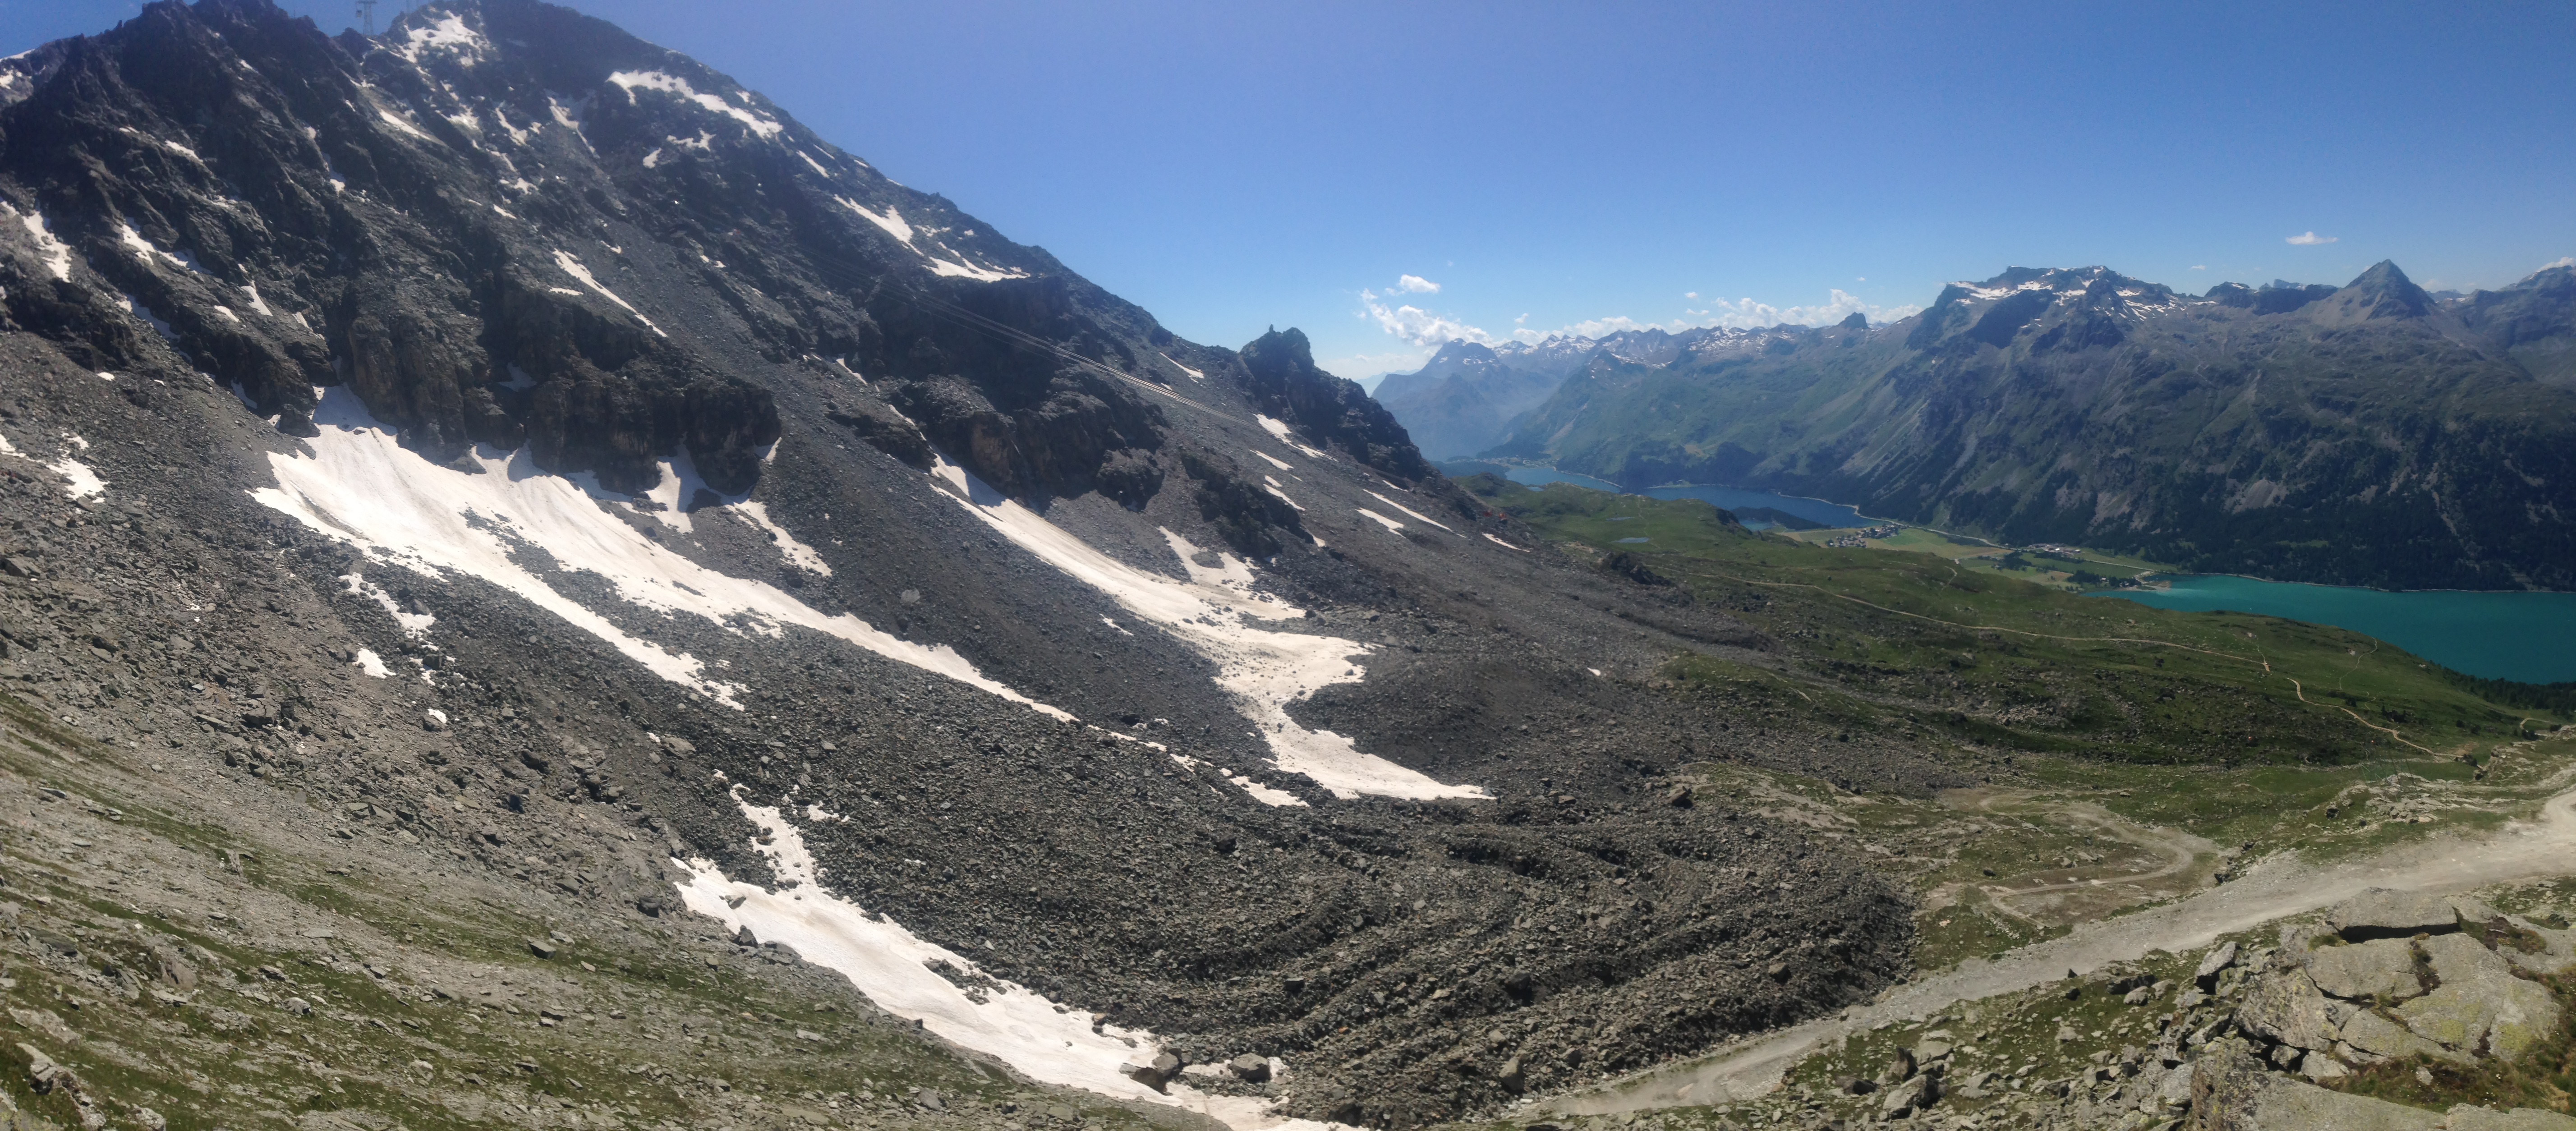 Corvatsch rock glacier, Switzerland (A. Cicoira)